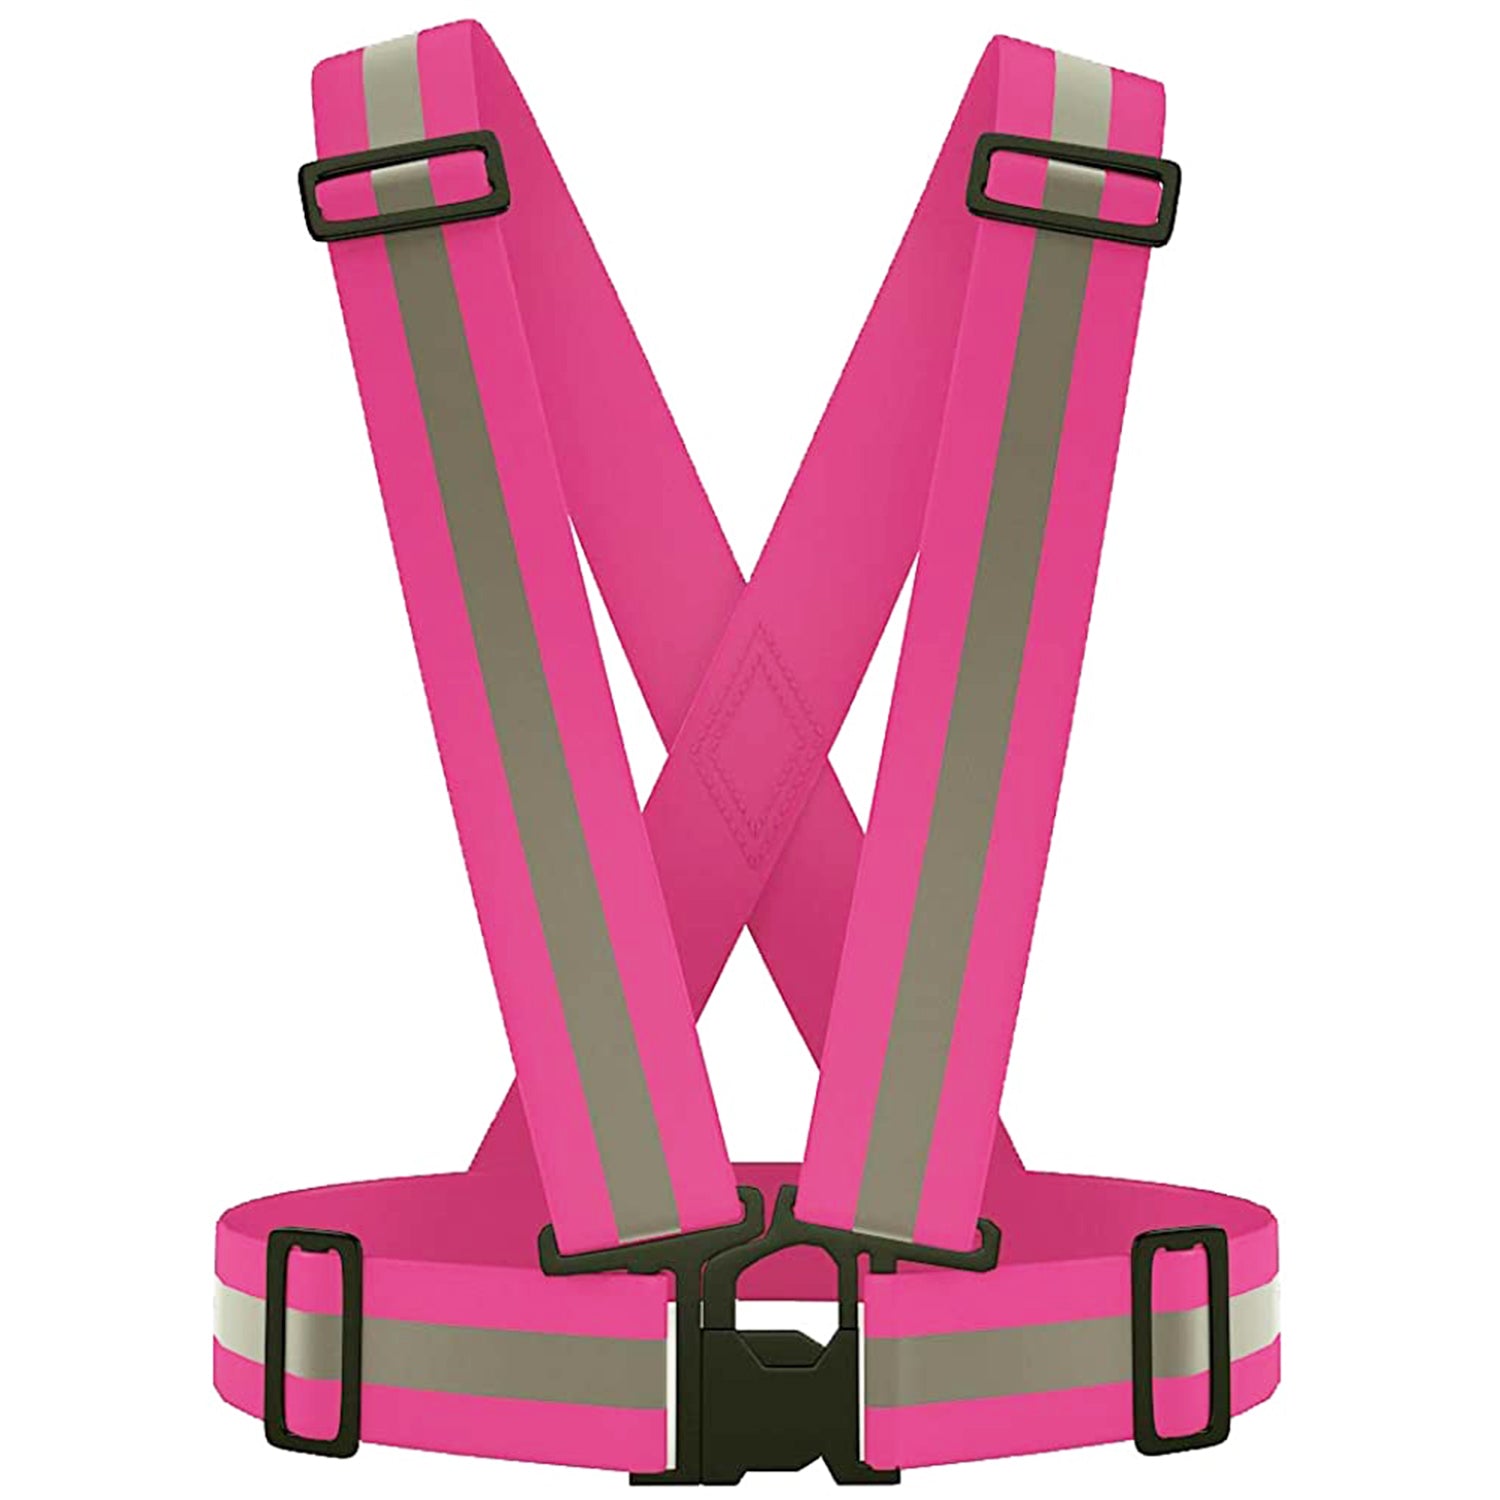 Safety Reflective Vest for Outdoors and Biking - Pink Color LifeKrafts